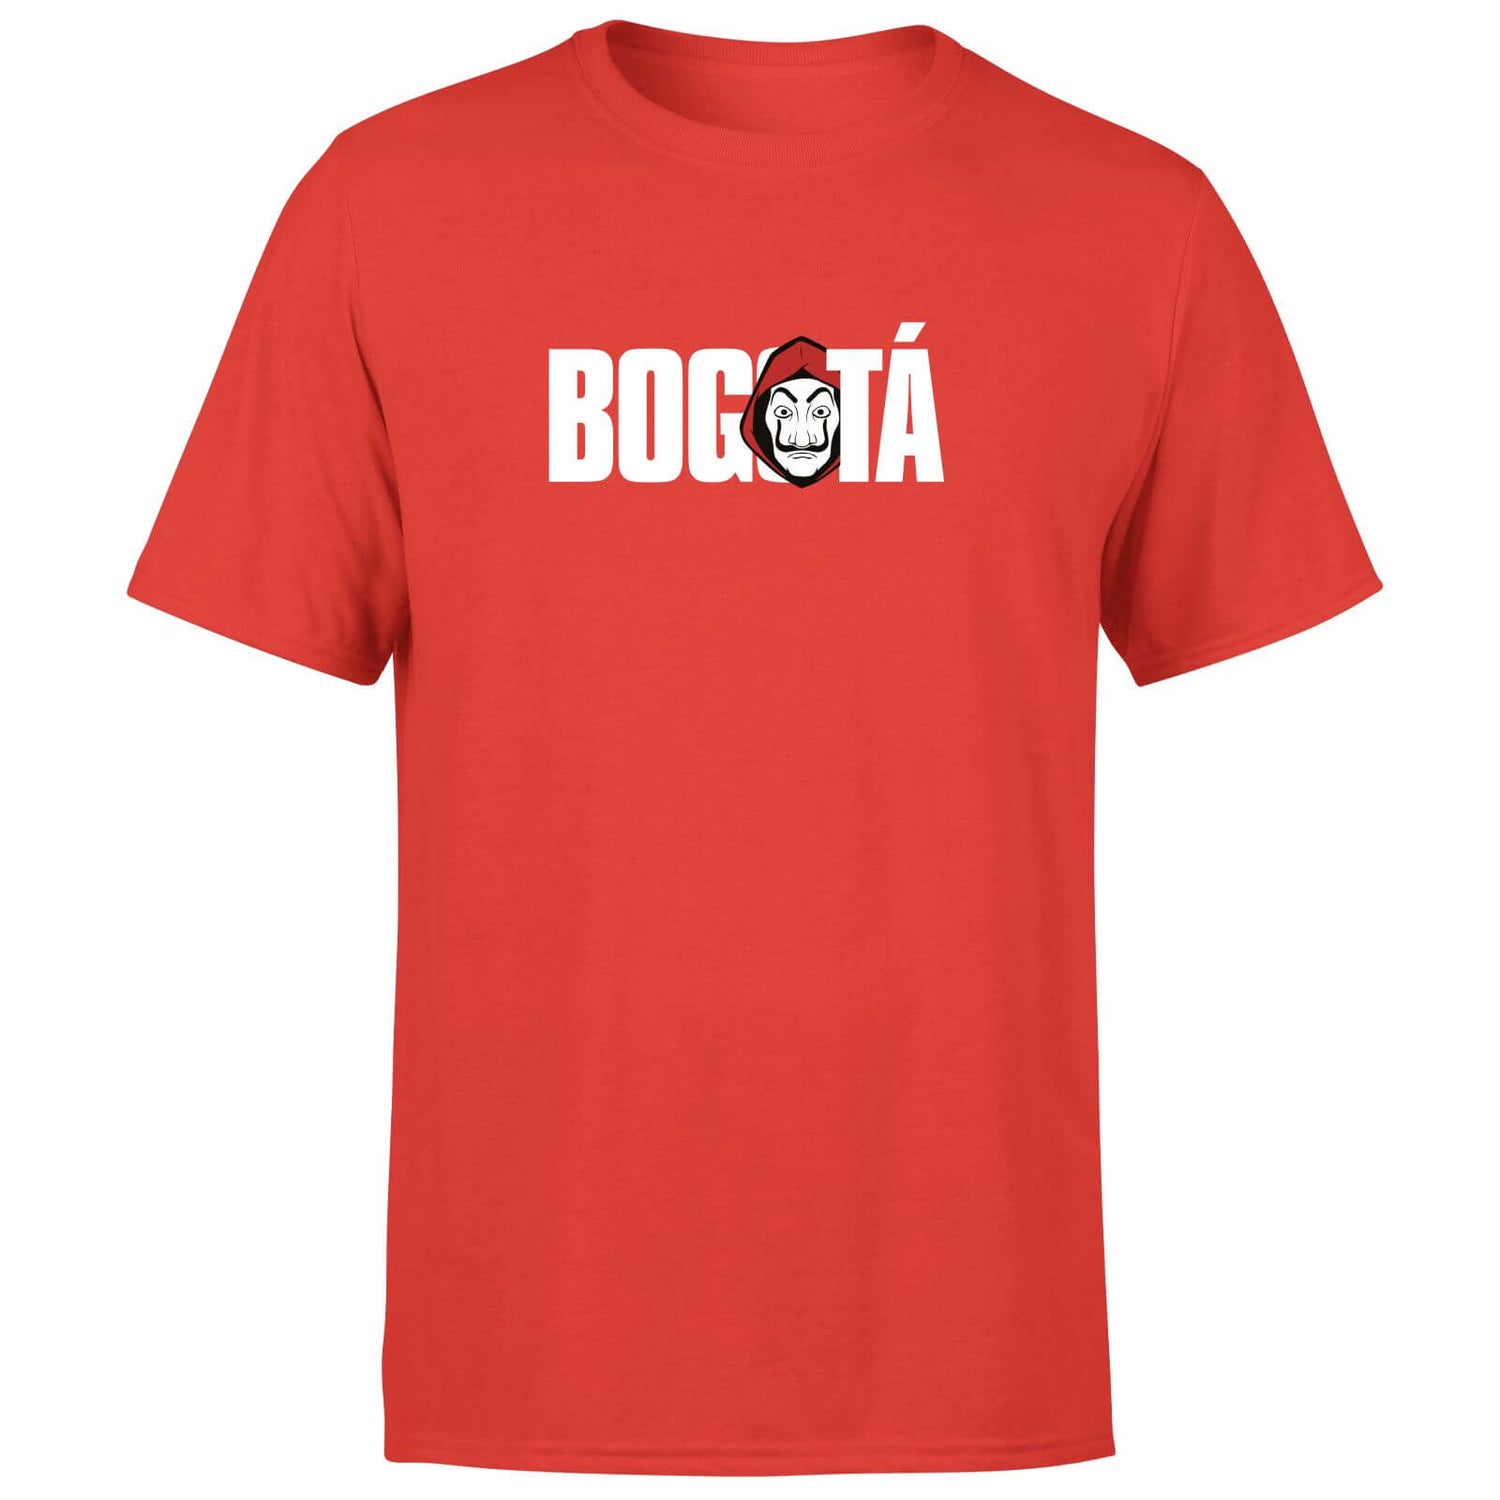 Money Heist Bogota Men's T-Shirt - Red